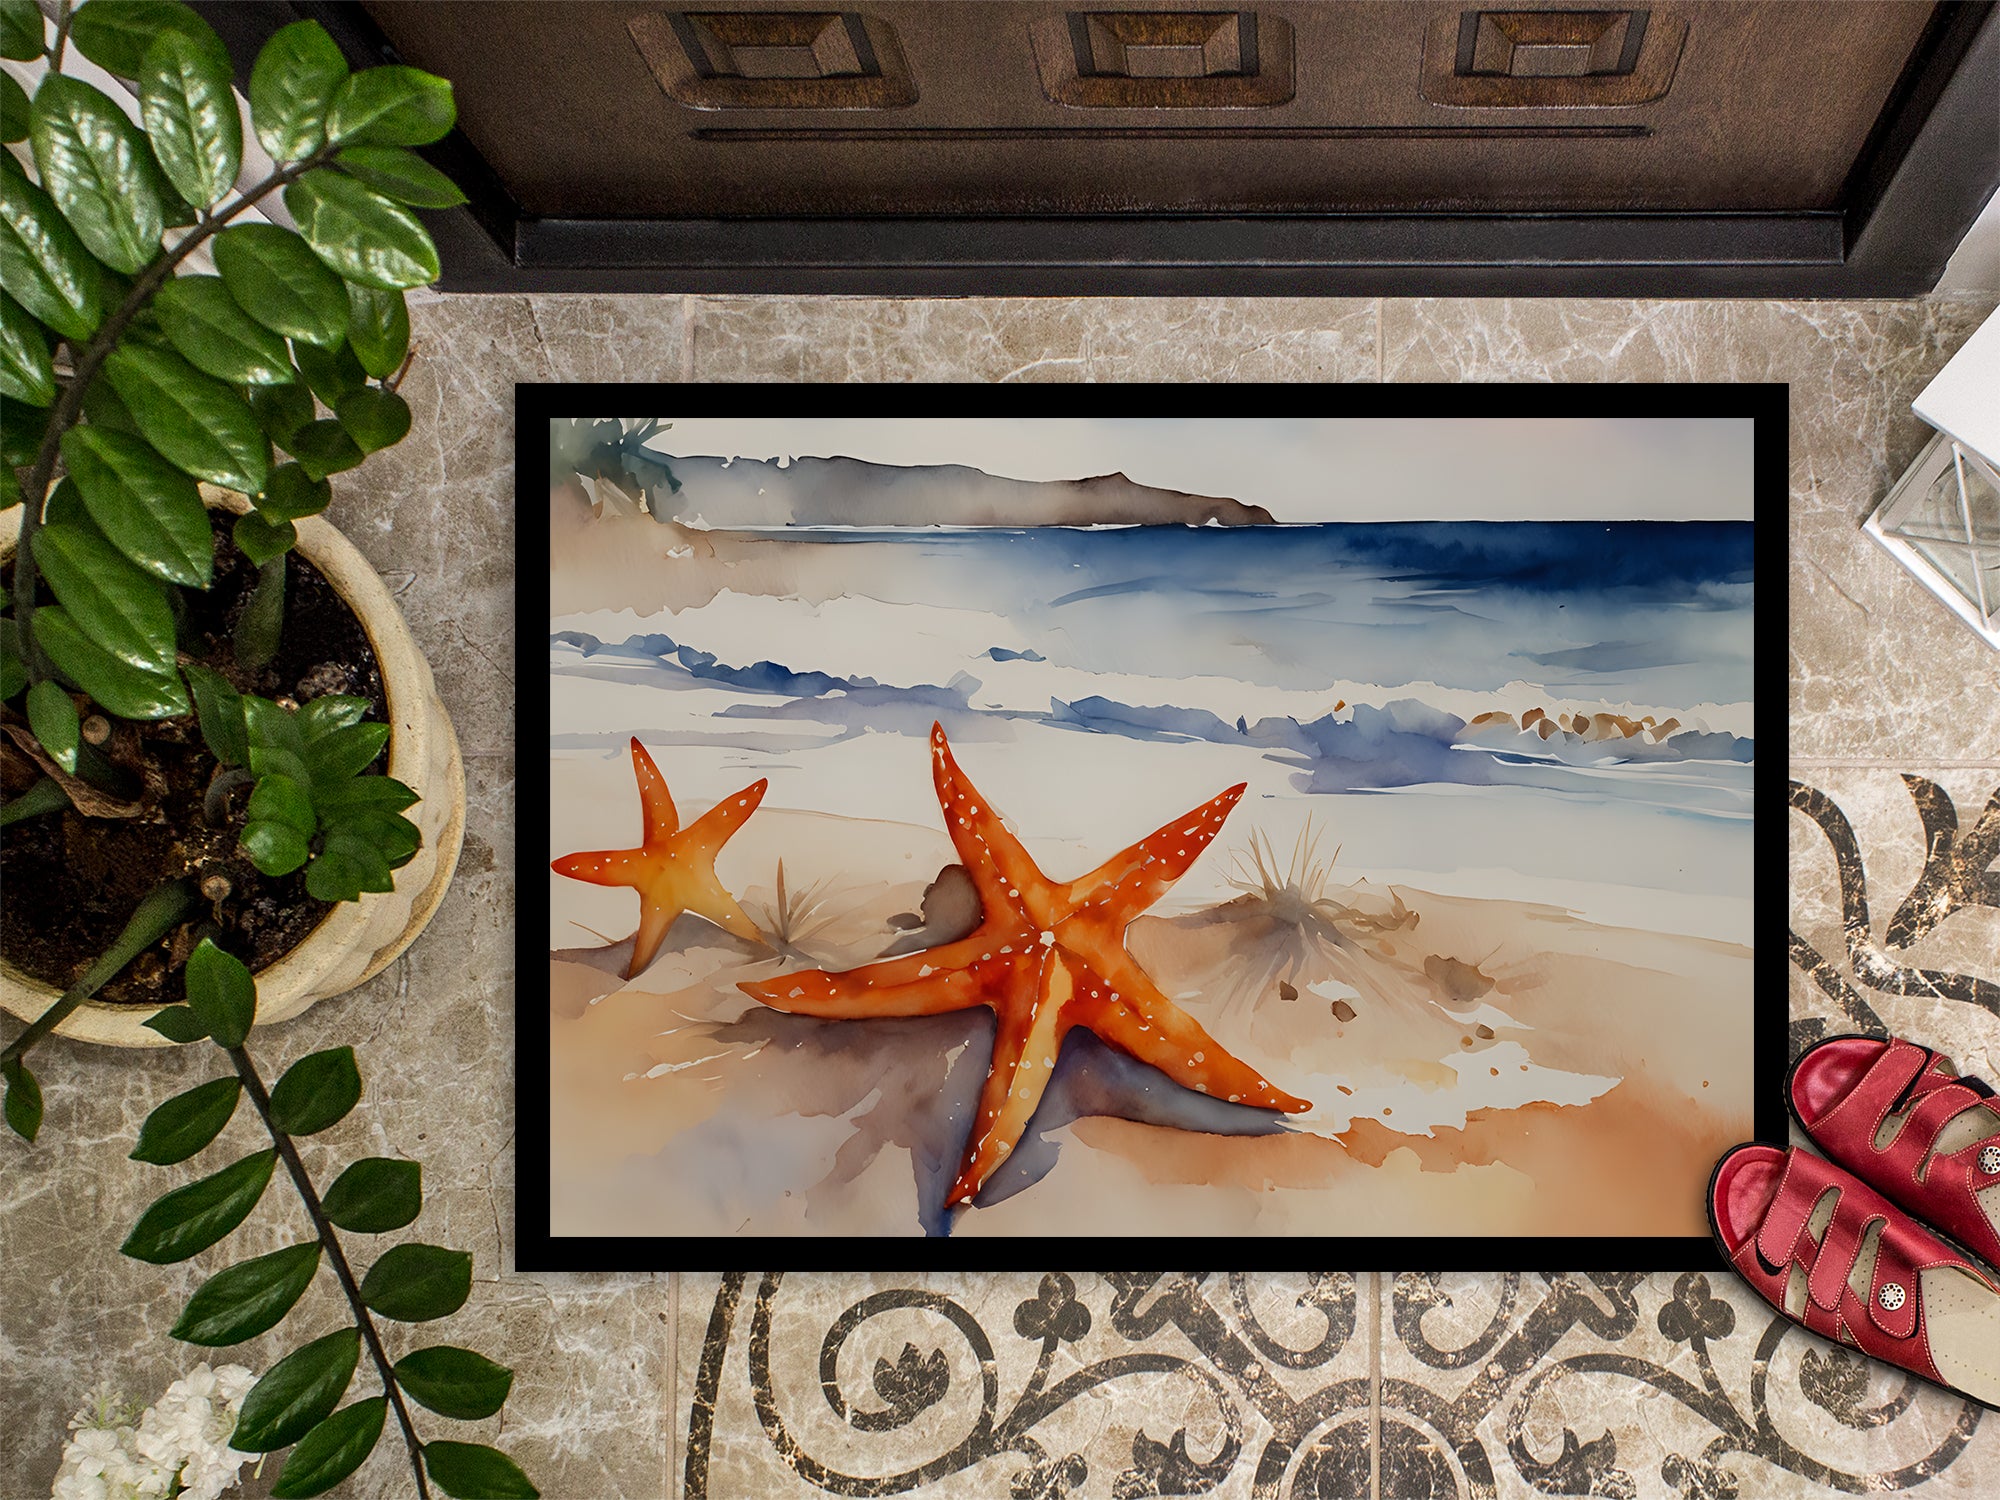 Starfish Doormat